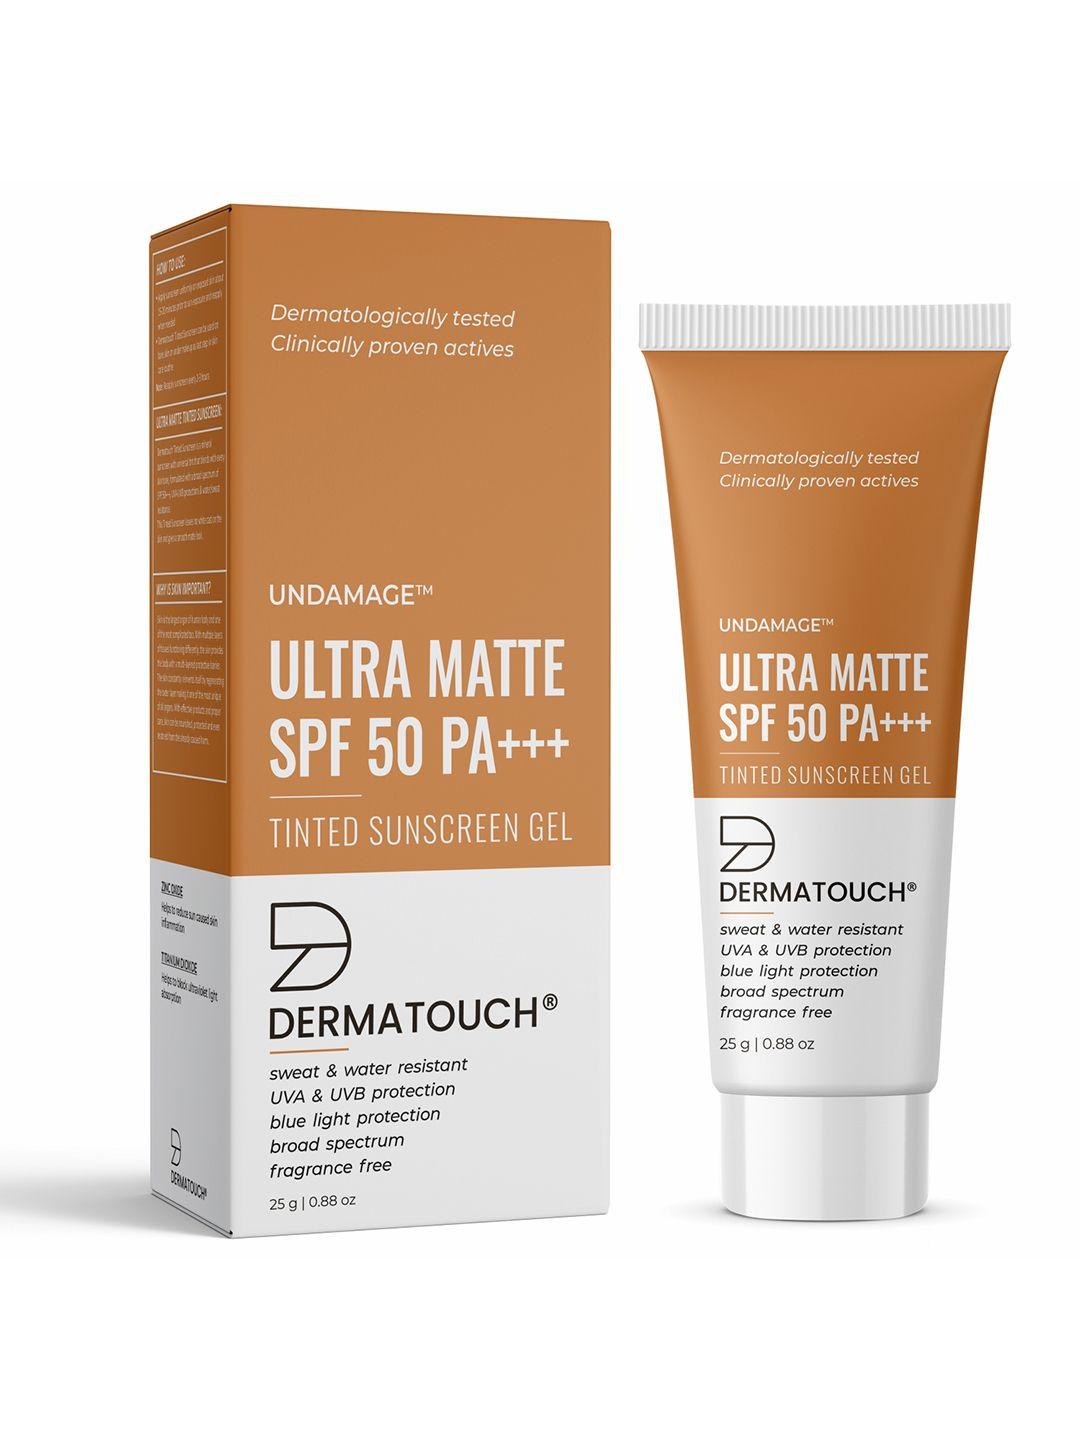 dermatouch-undamage-water-&-sweat-resistant-ultra-matte-tinted-sunscreen-spf-50-pa+++-25gm